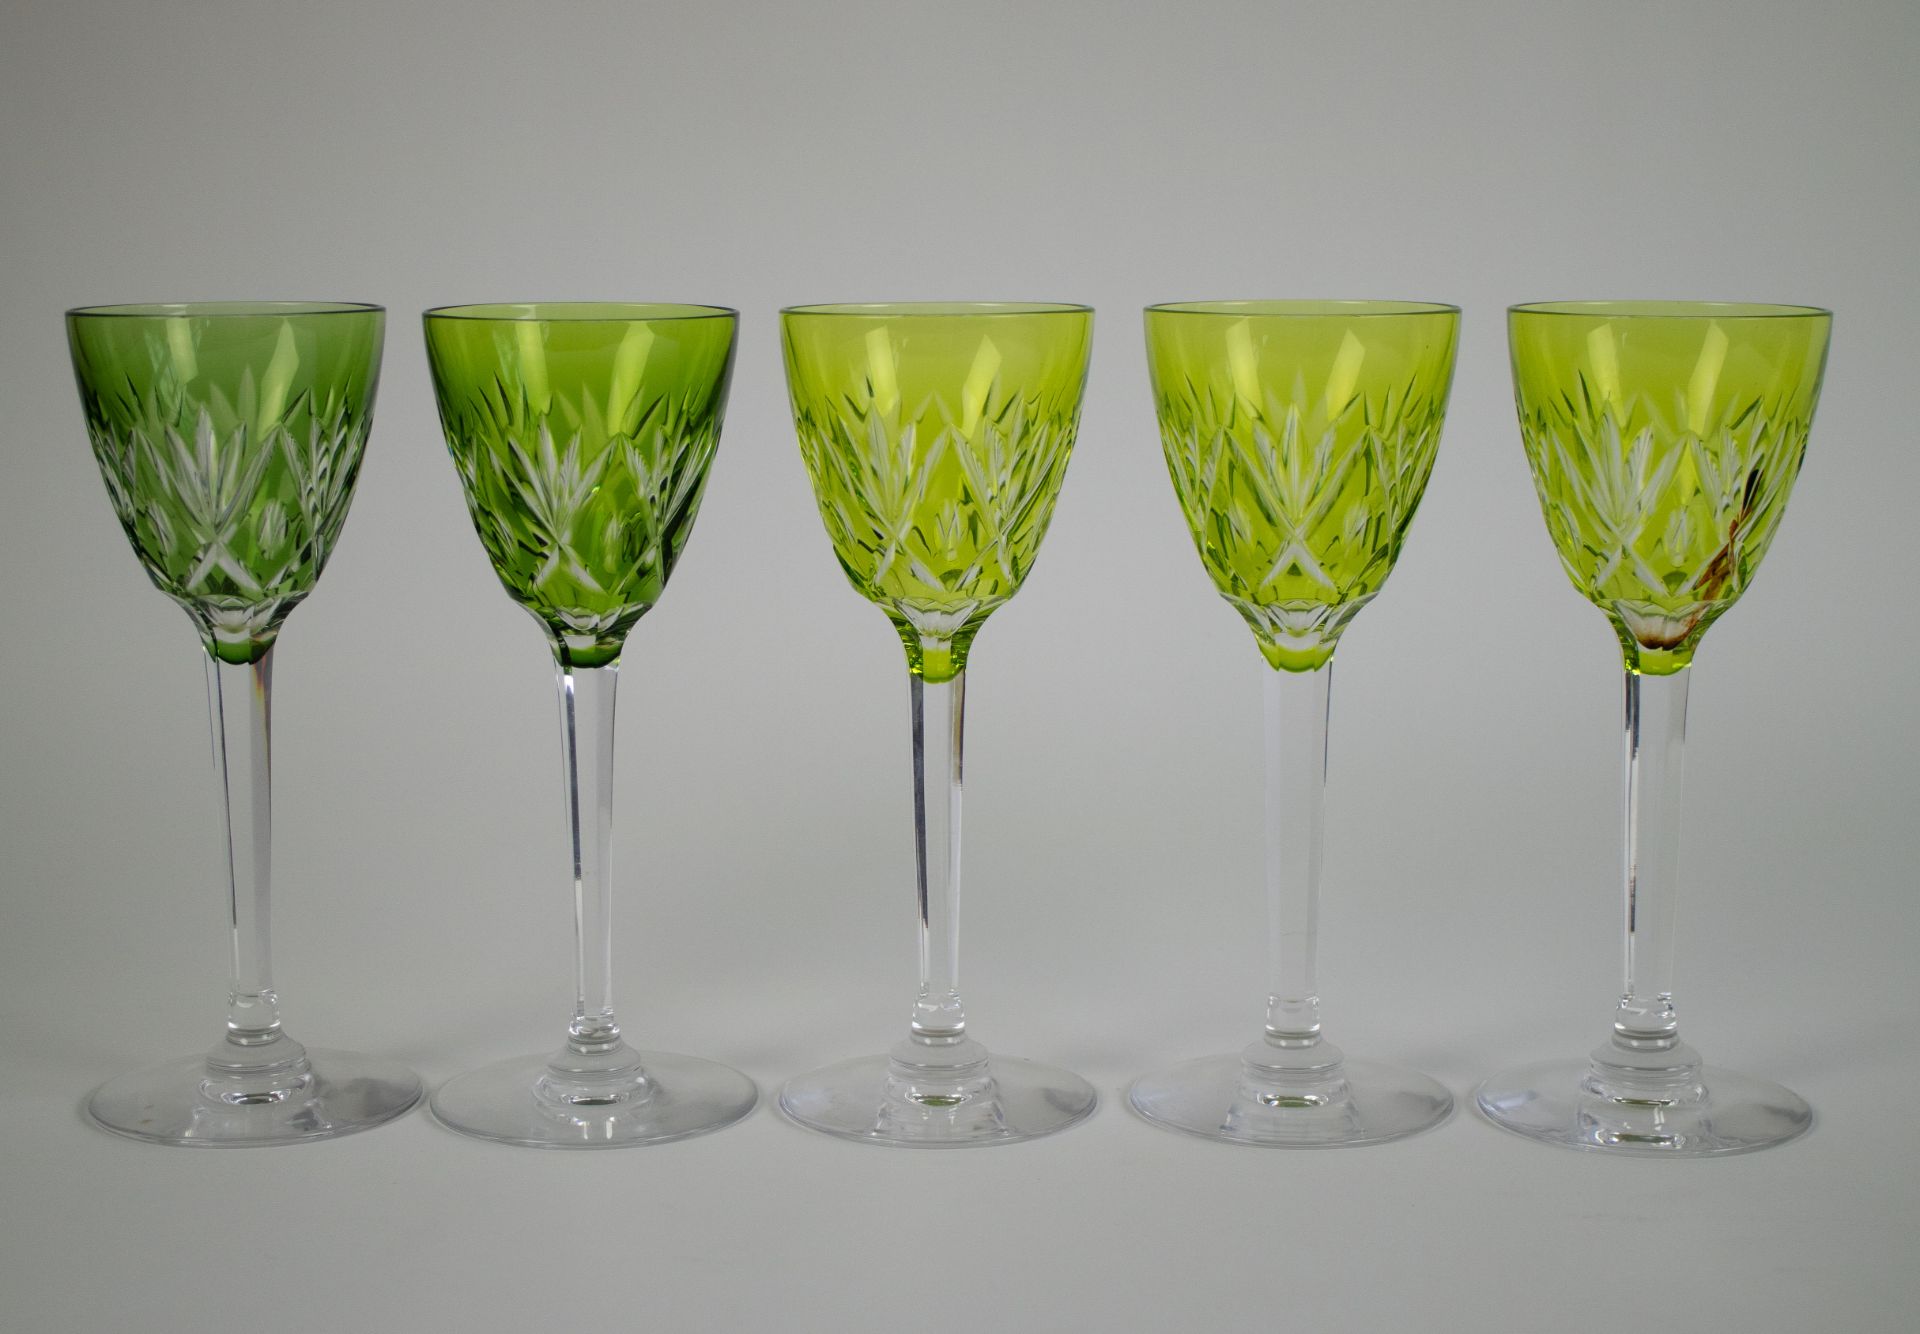 Lot with 5 green crystal Val Saint Lambert wine glasses